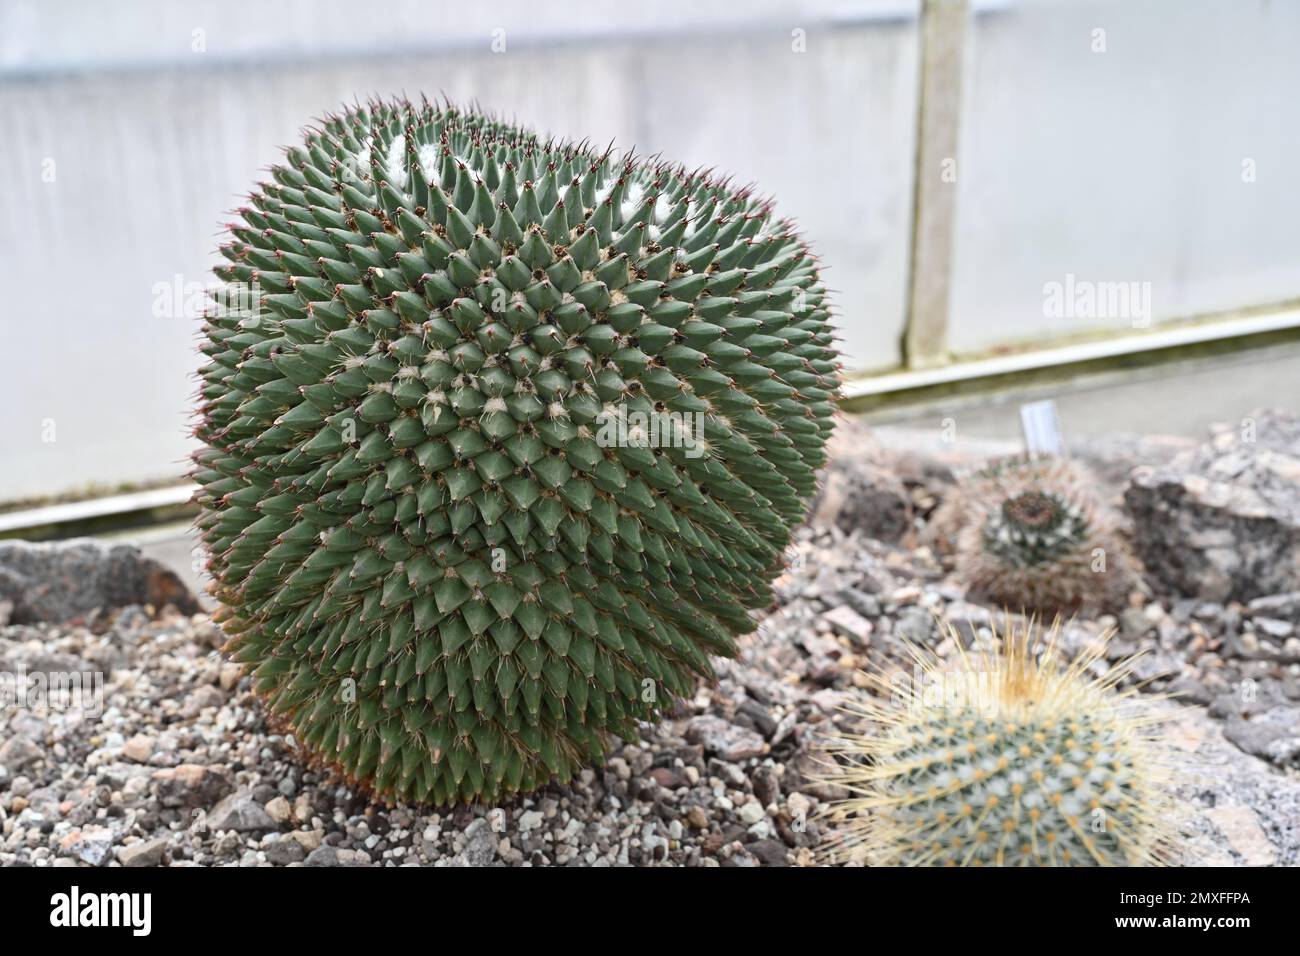 Cactus called in Latin Mammillaria carnea growing in a greenhouse. Stock Photo